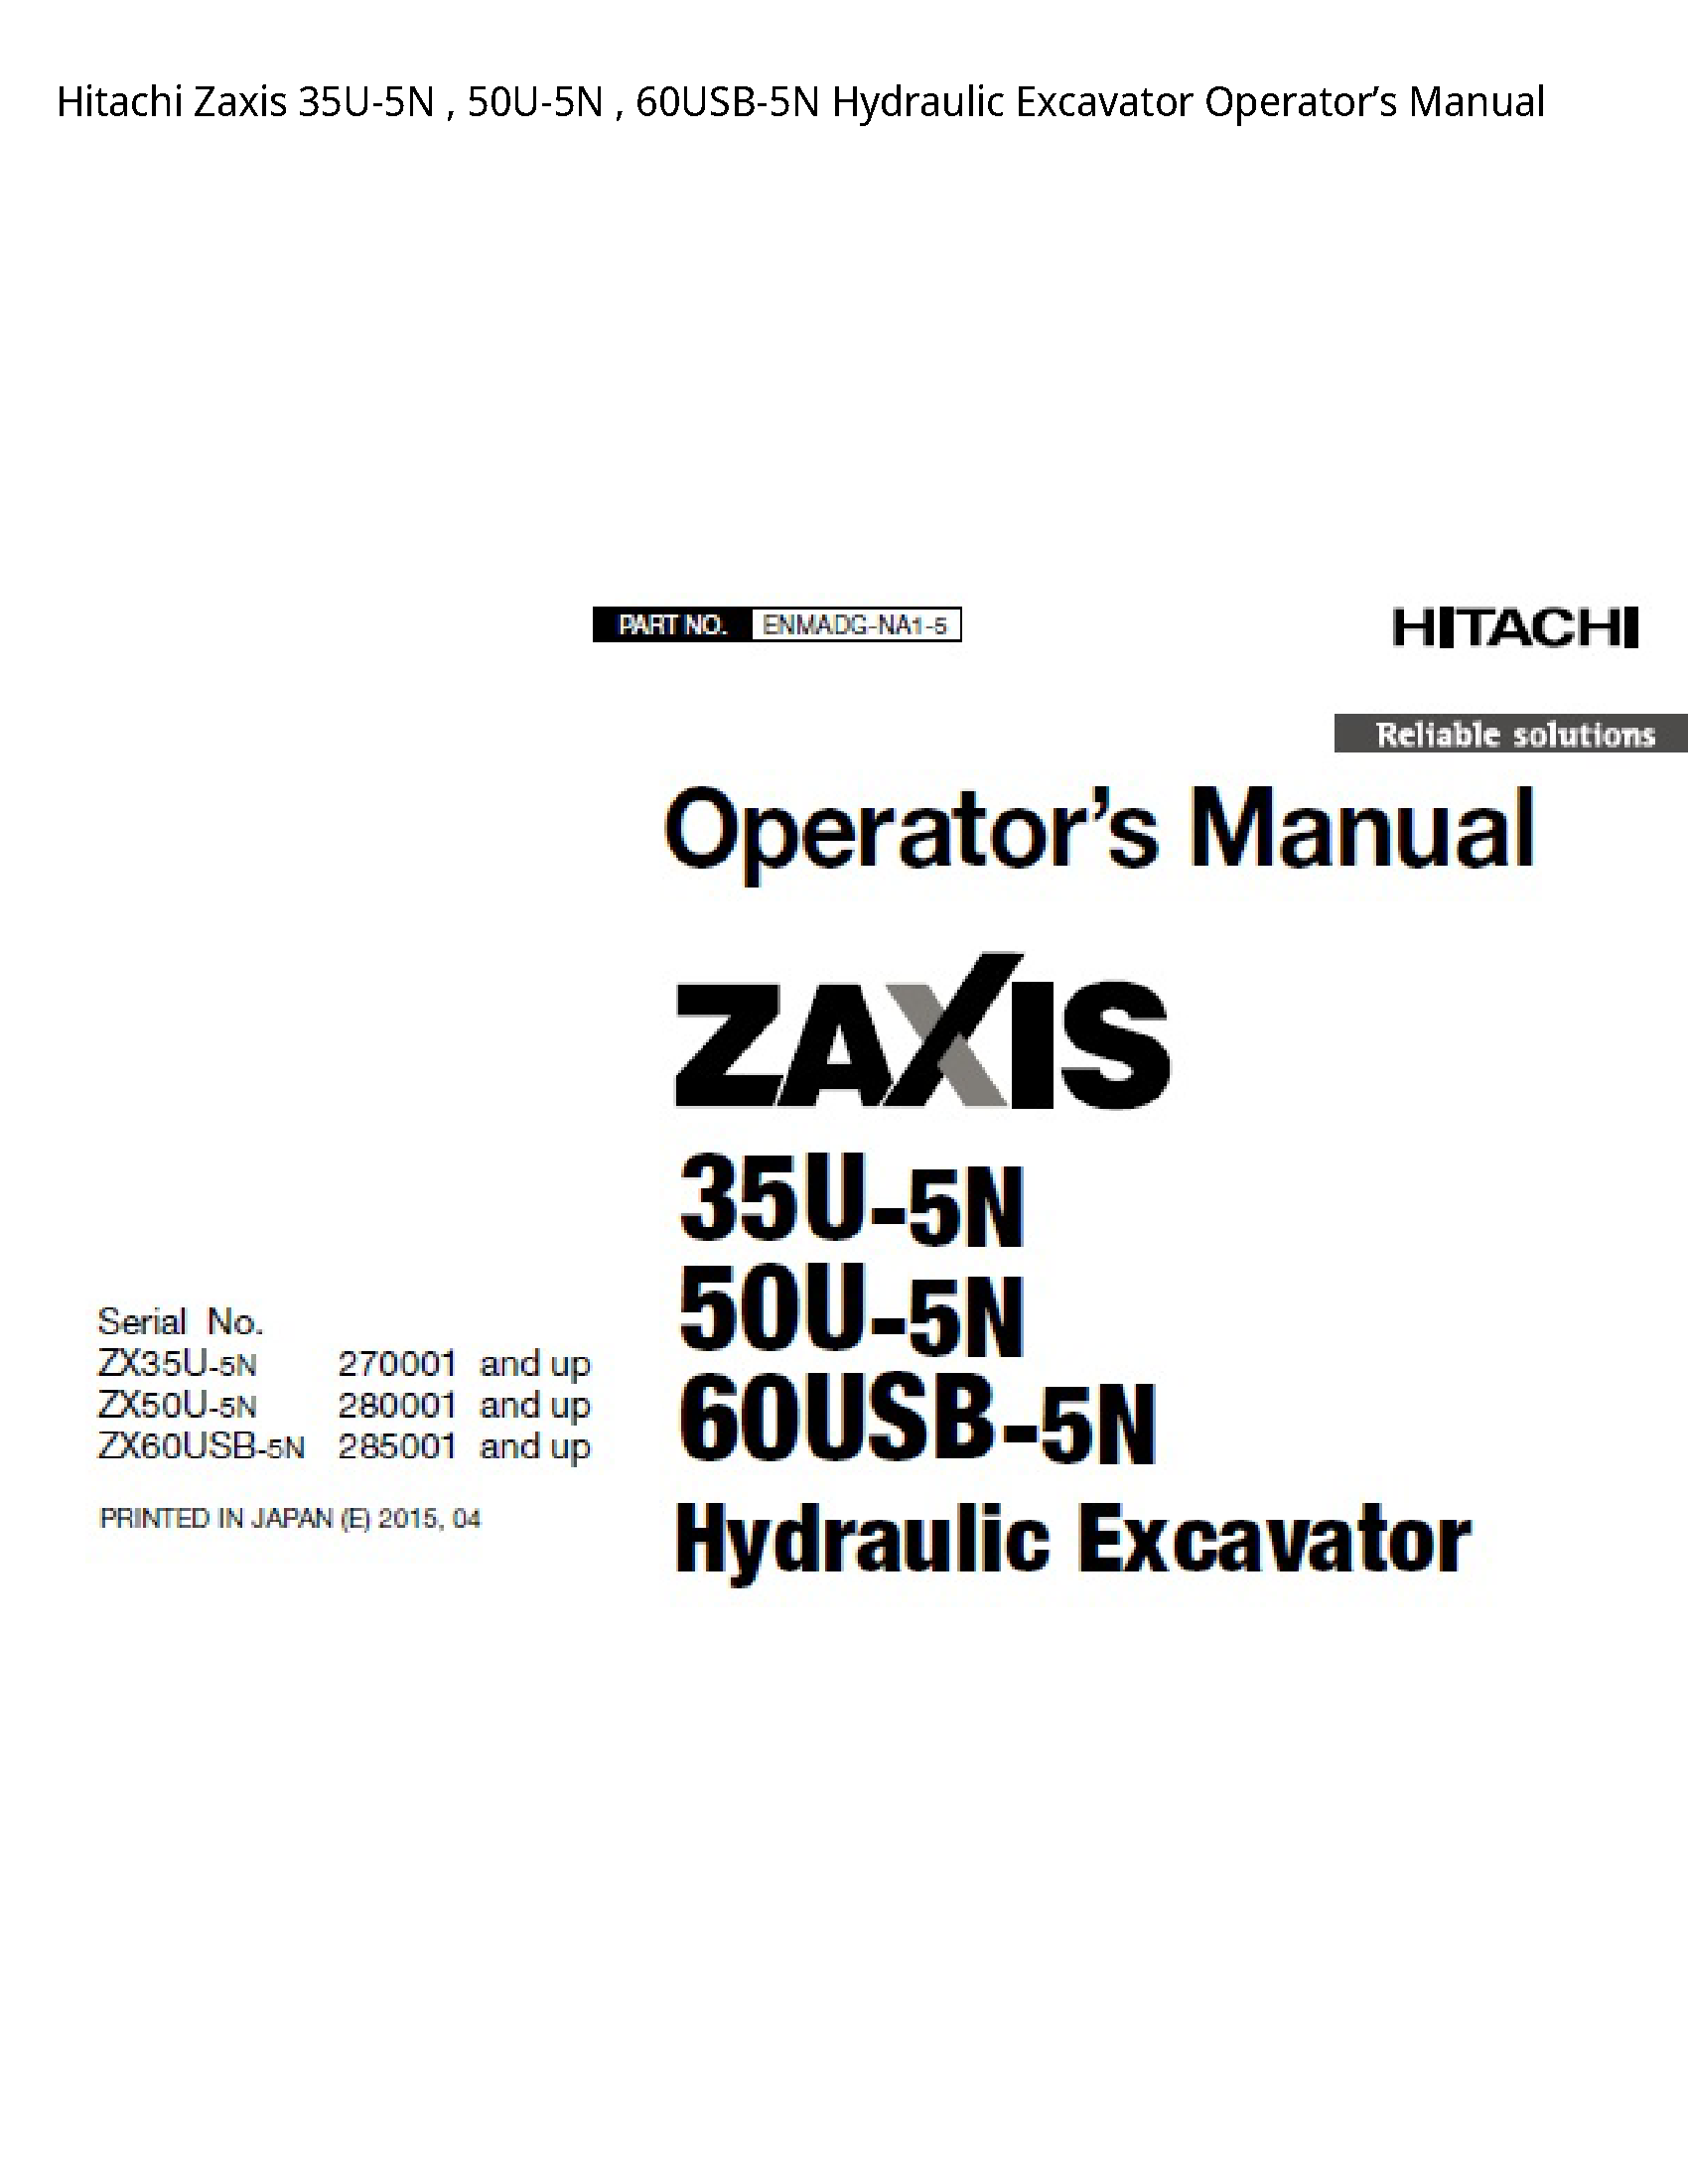 Hitachi 35U-5N Zaxis Hydraulic Excavator Operator’s manual